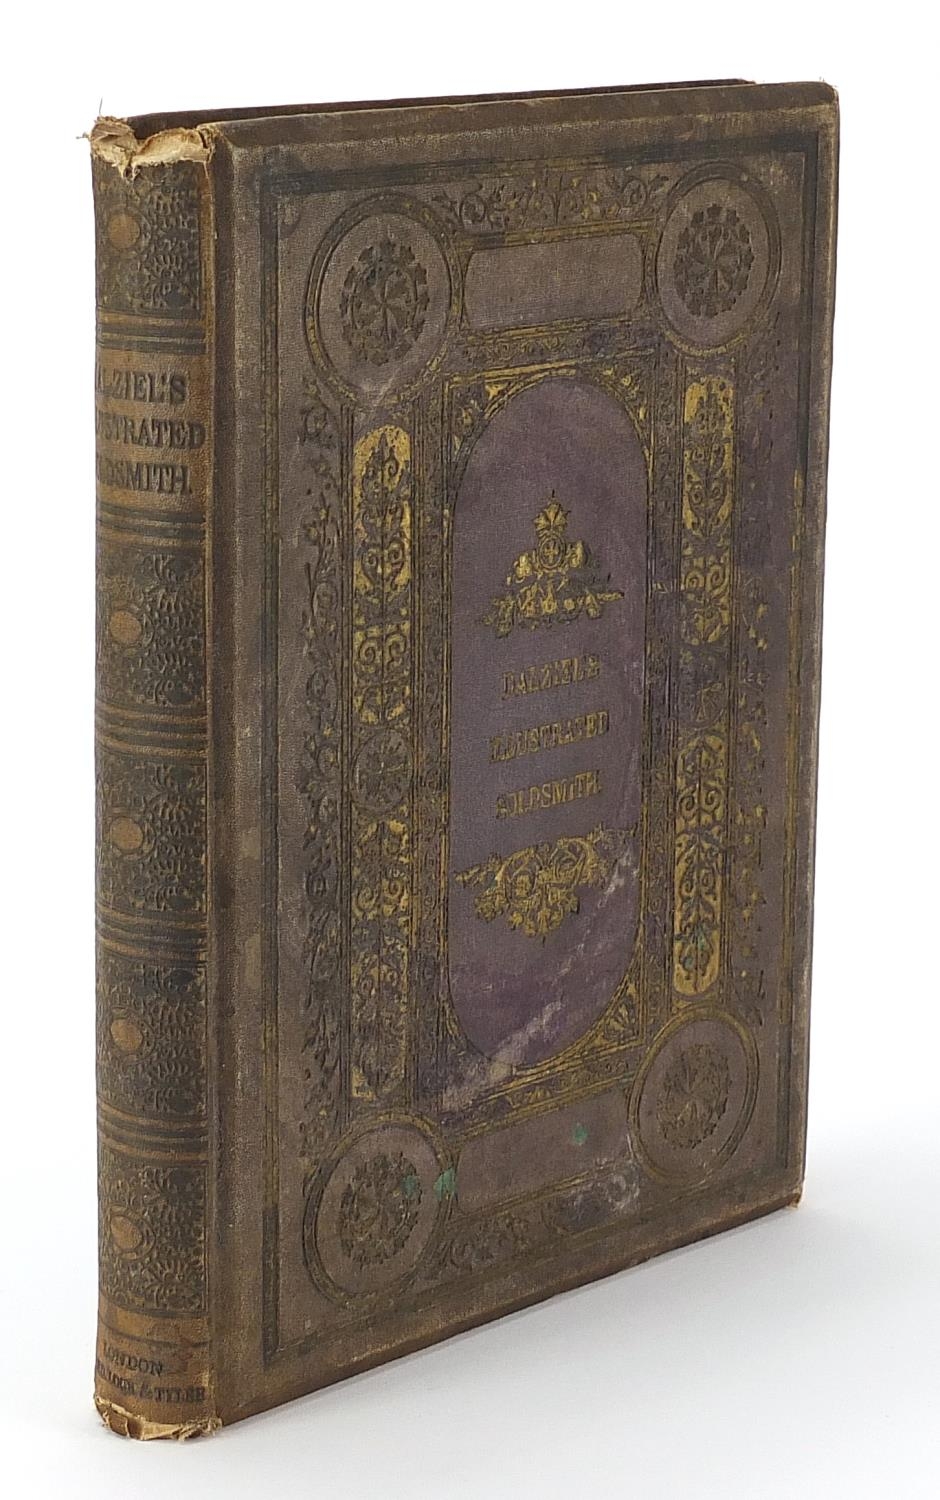 Dalziels Illustrated Goldsmith, Hardback book published Ward & Lock 1865